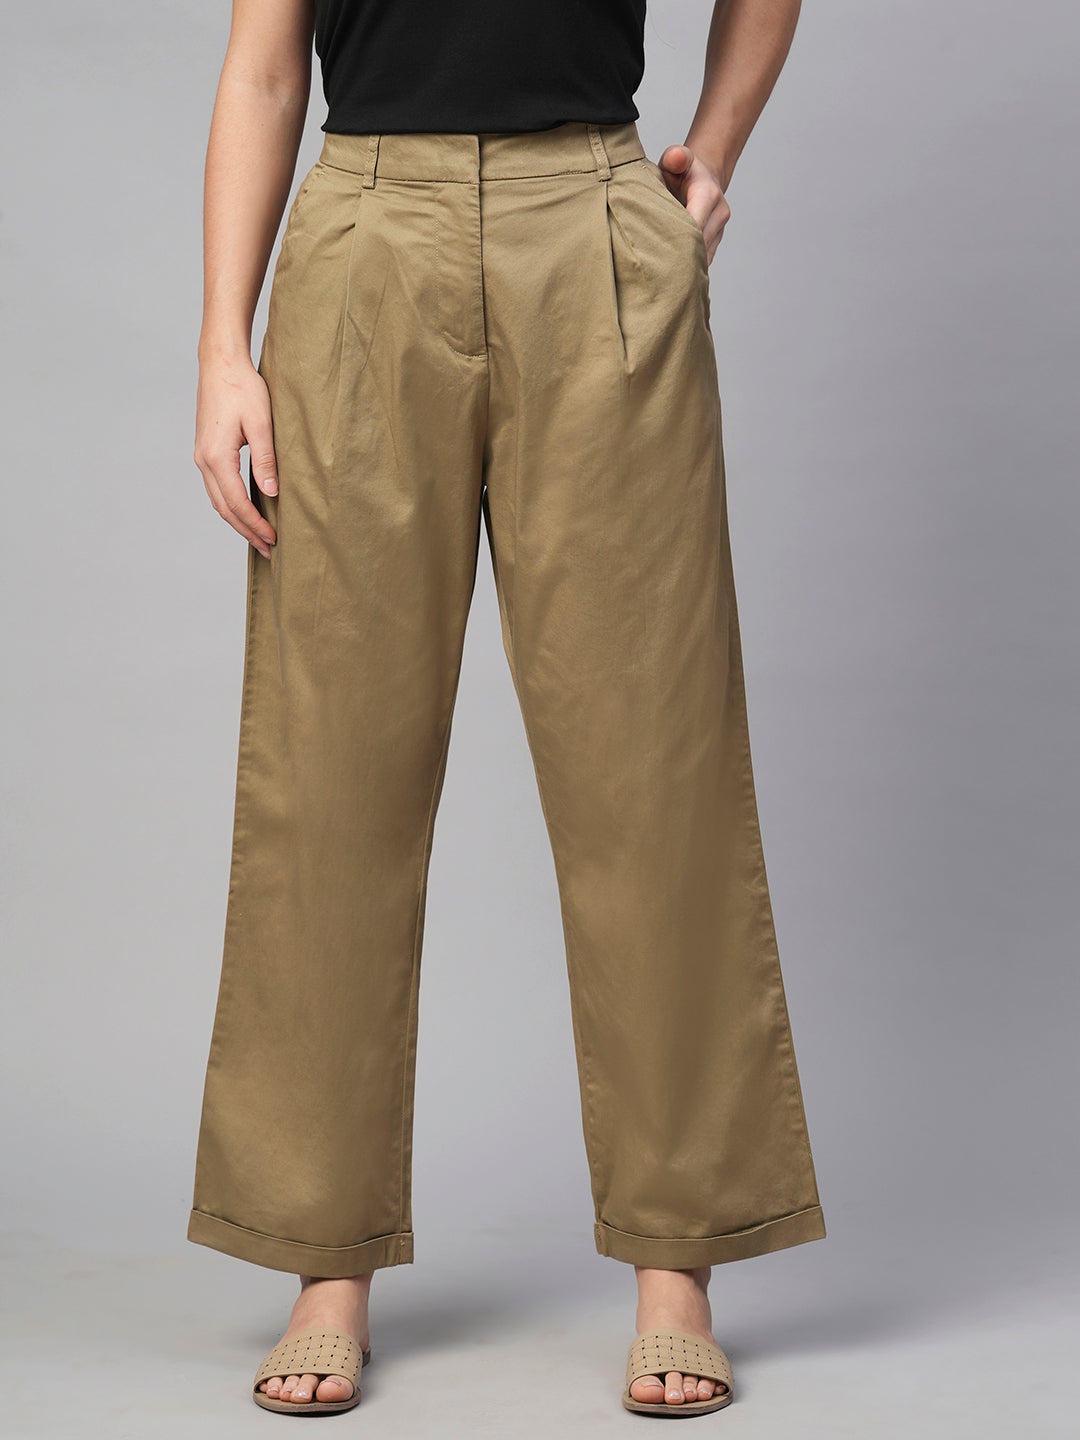 Women's Khaki Cotton Elastane Straight Fit Pant